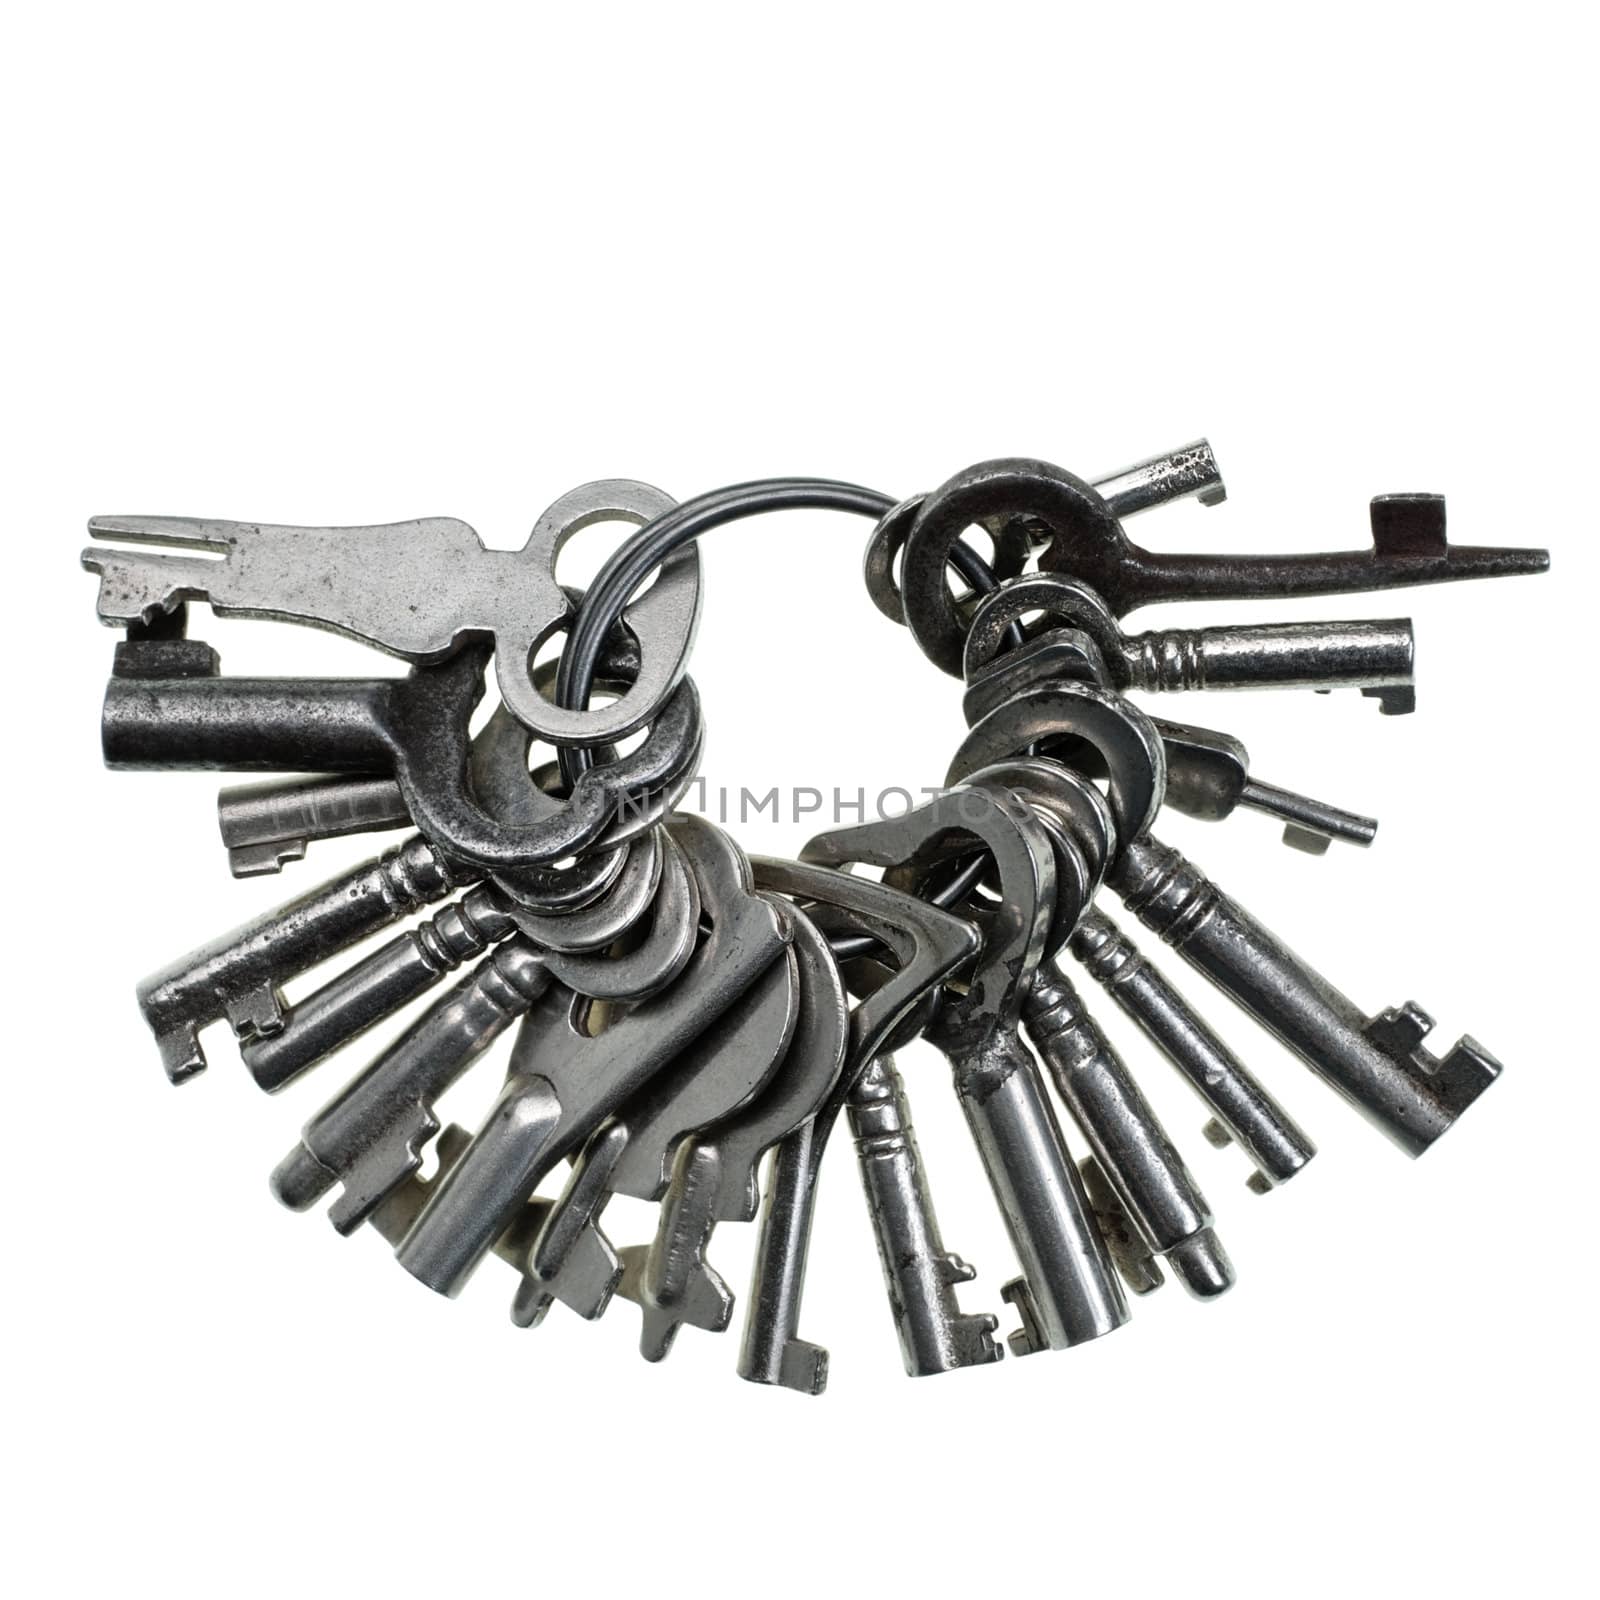 Bunch of keys by naumoid